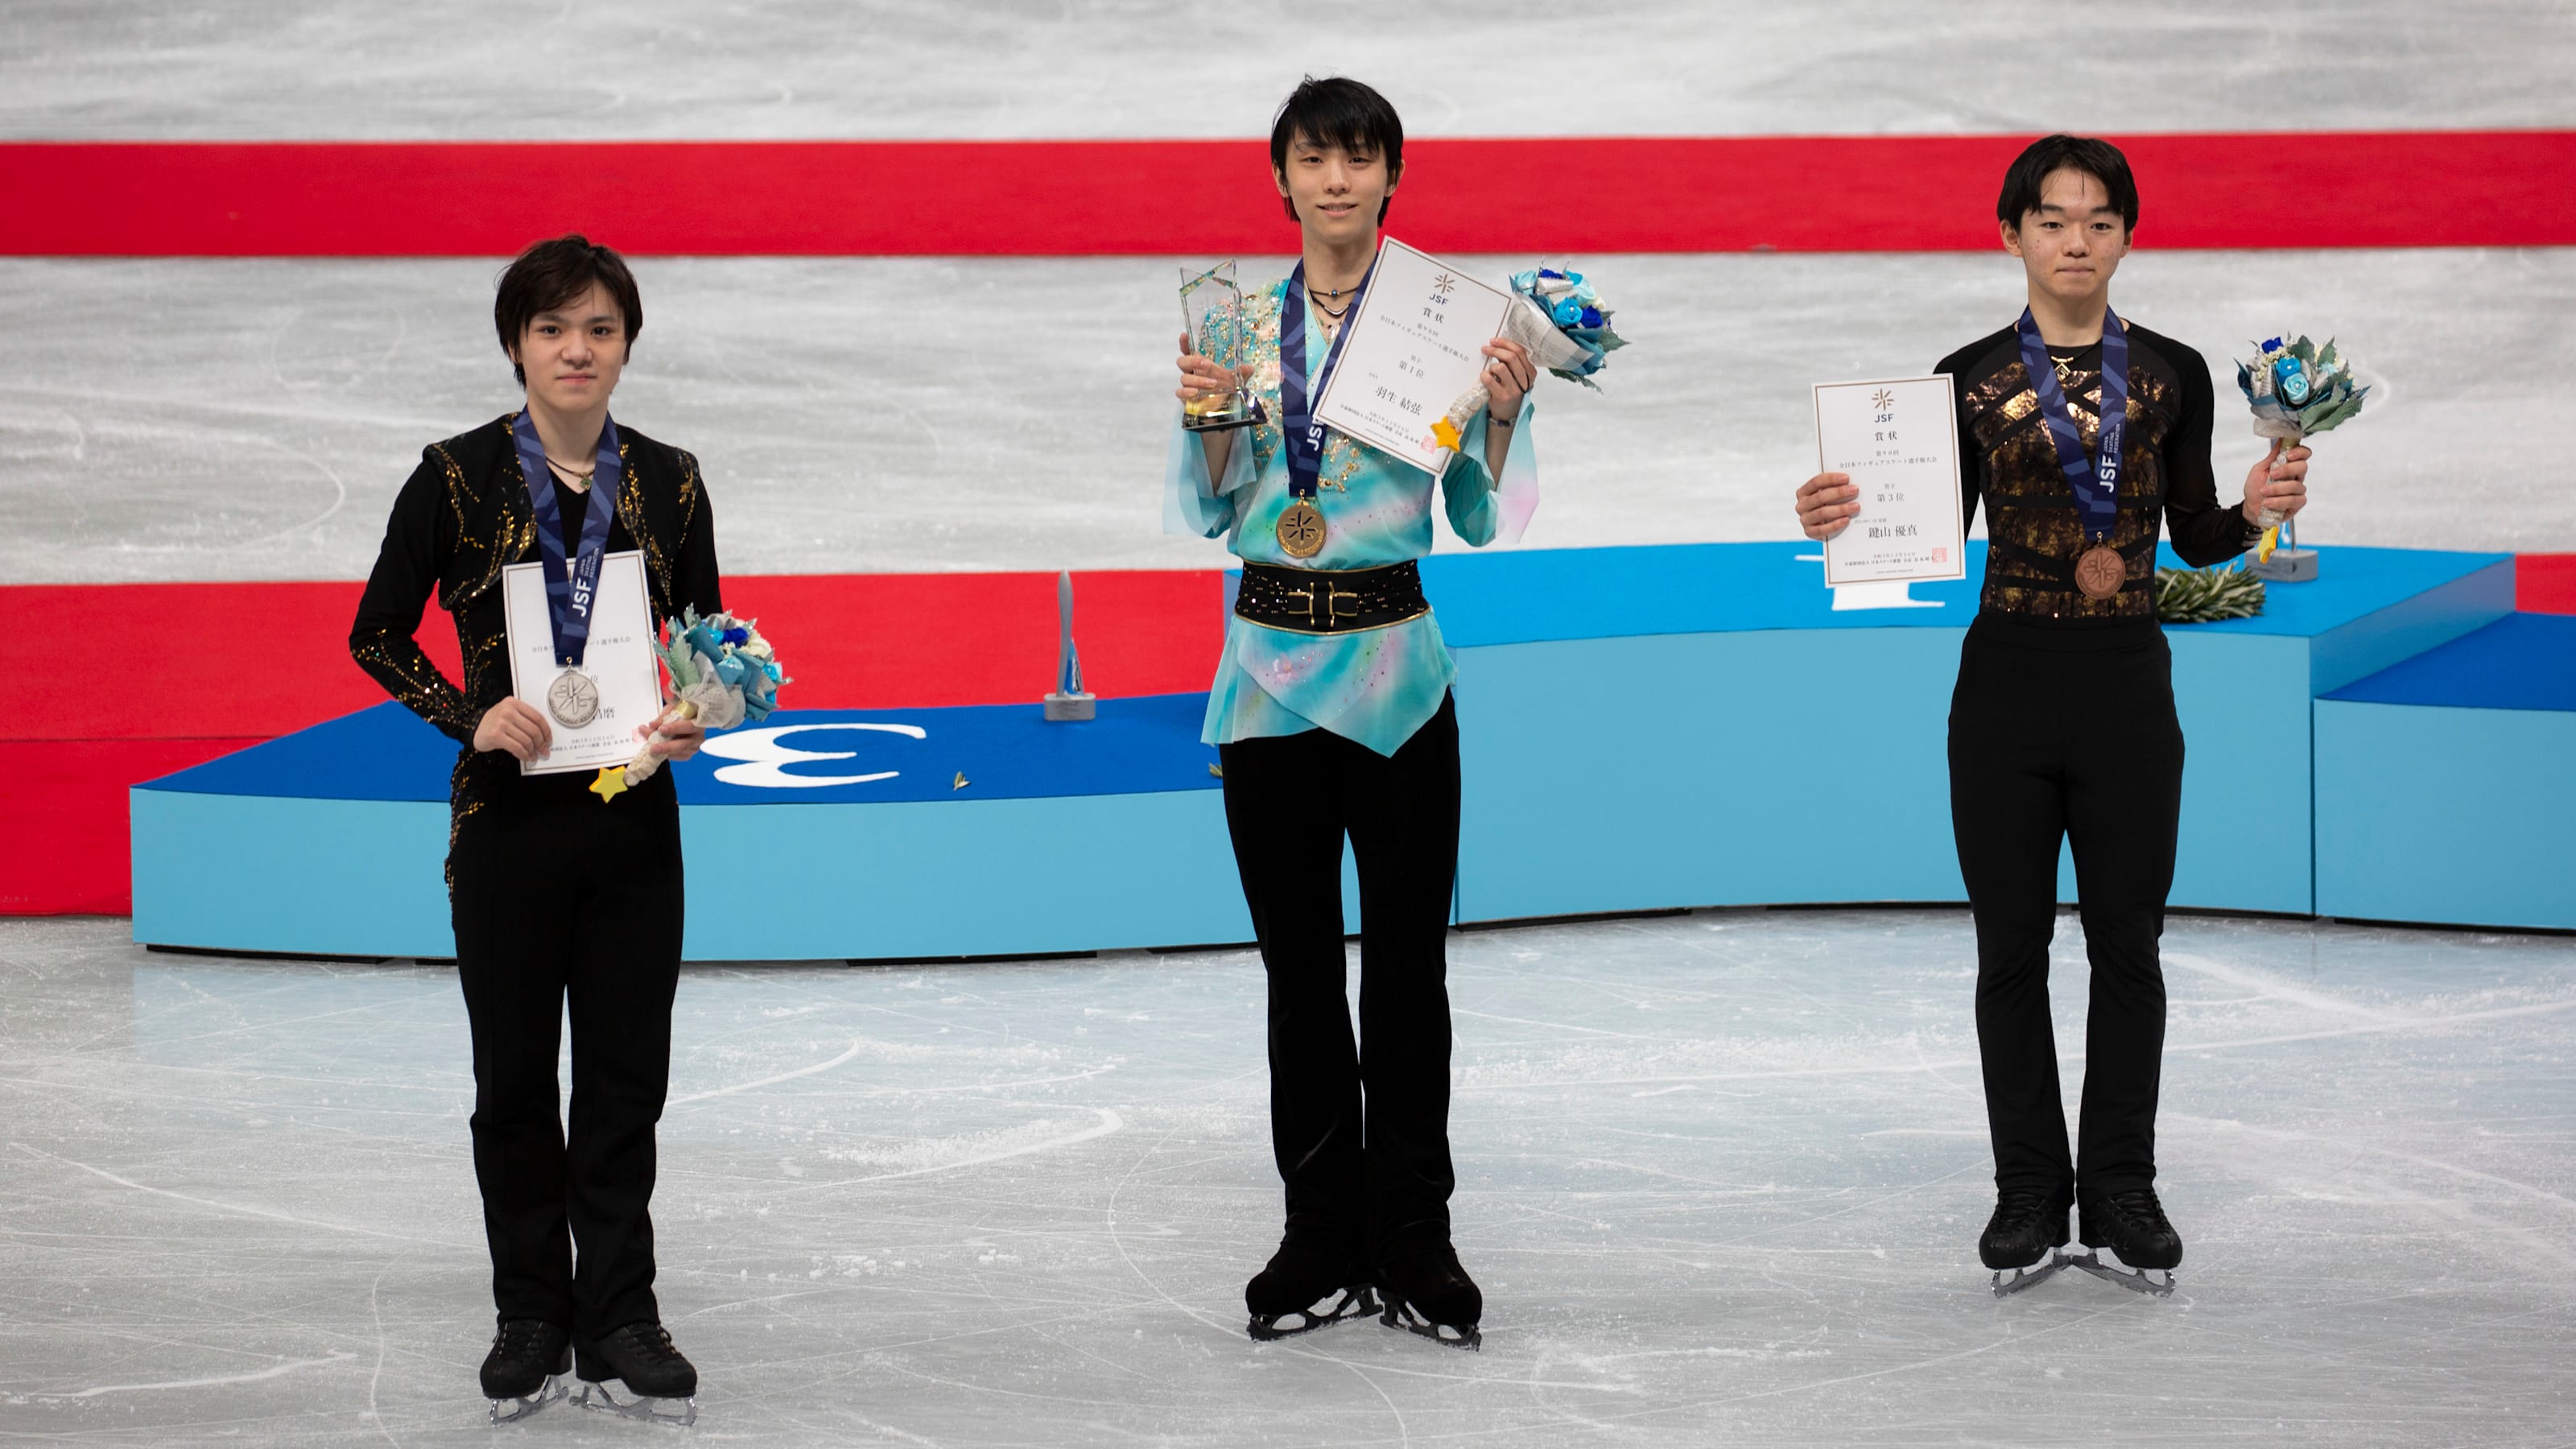 Winter olympics hanyu 2022 yuzuru “His Performance